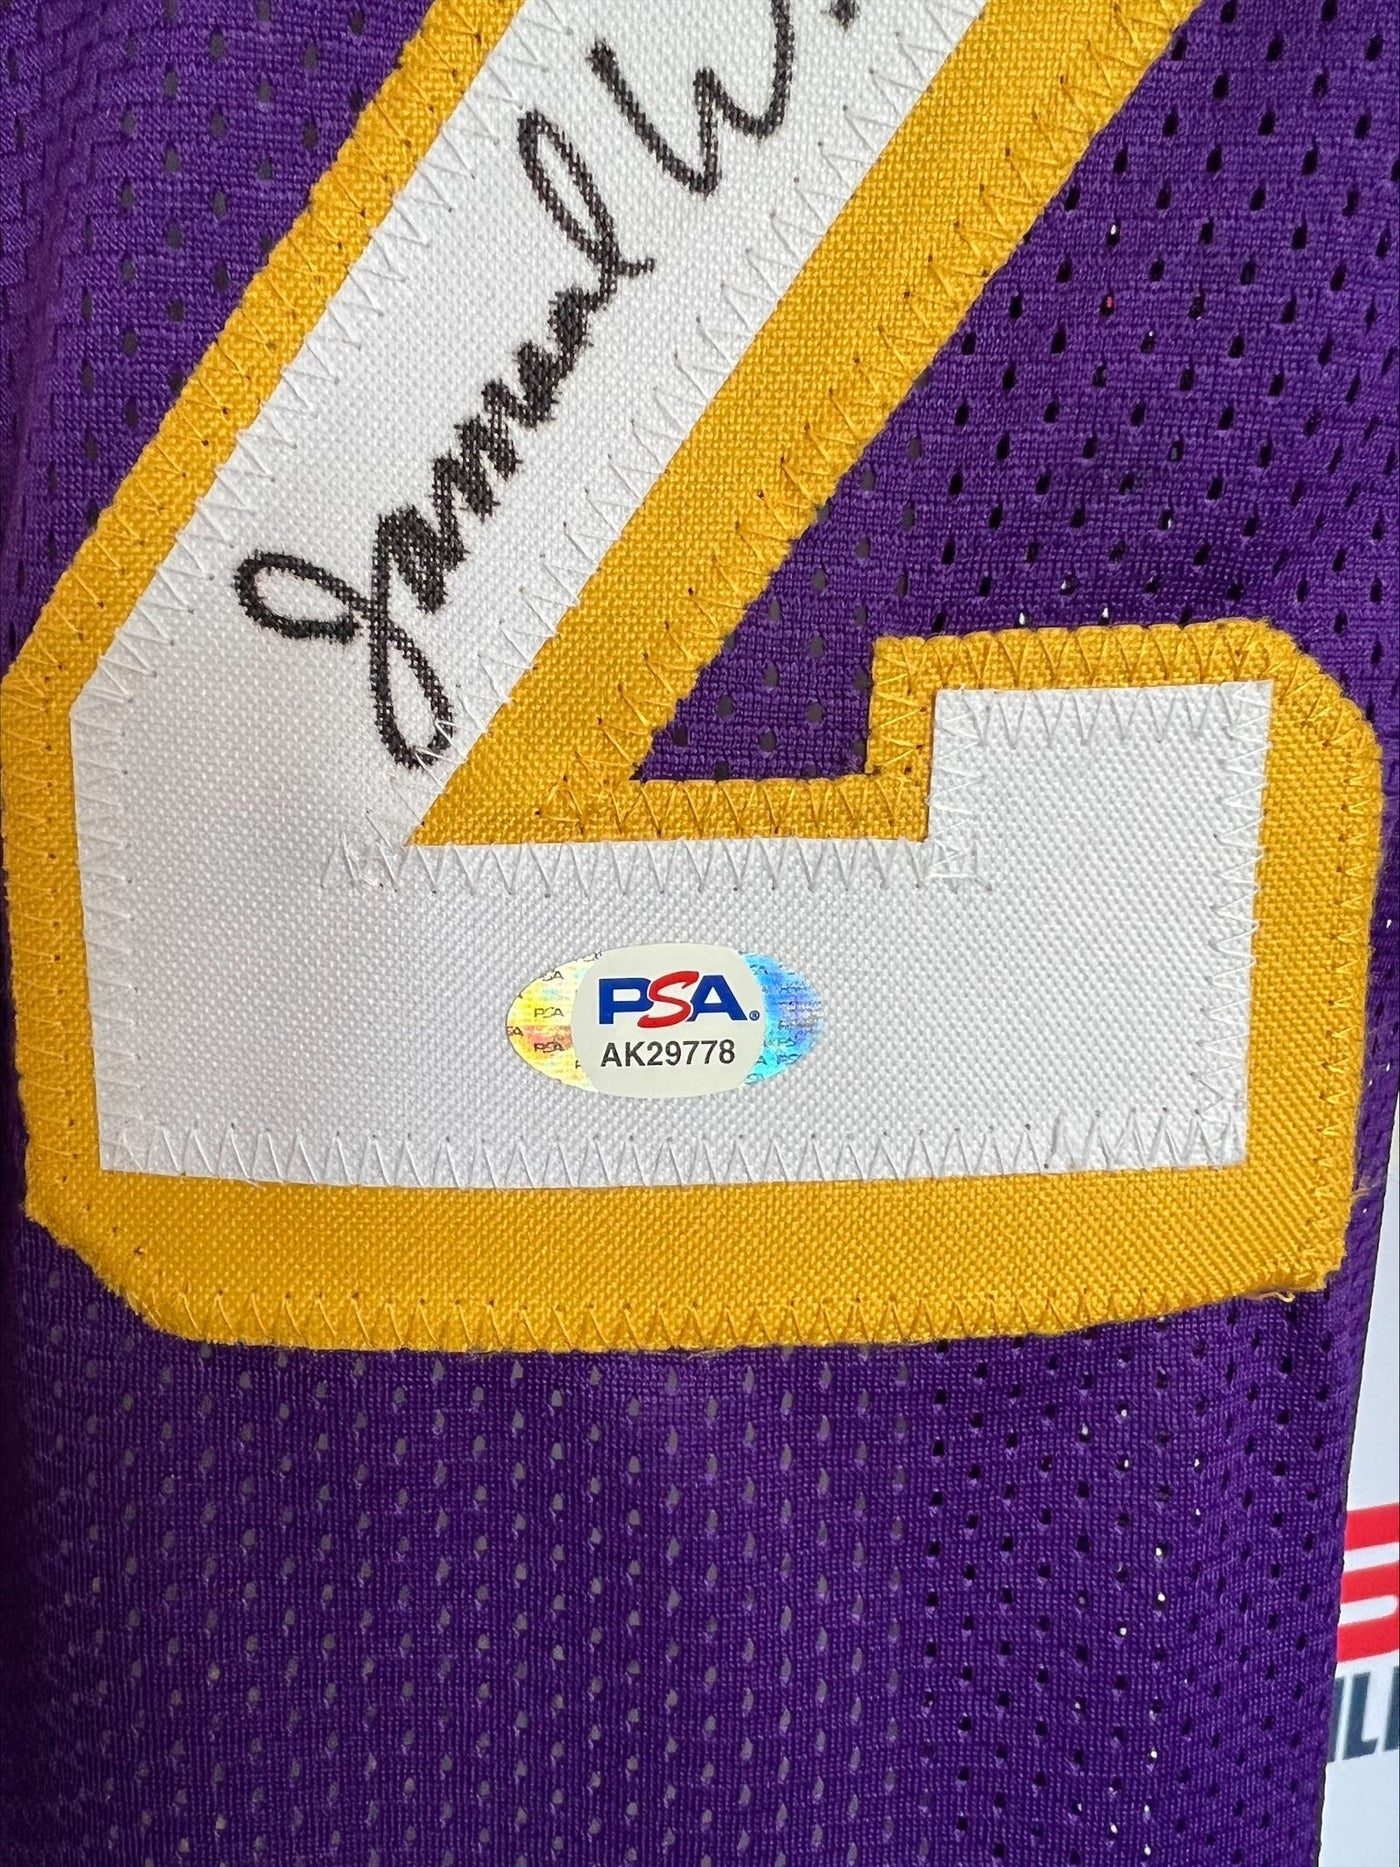 Jamaal Wilkes Autographed Signed La Lakers Purple Home Jersey PSA COA NBA Champ